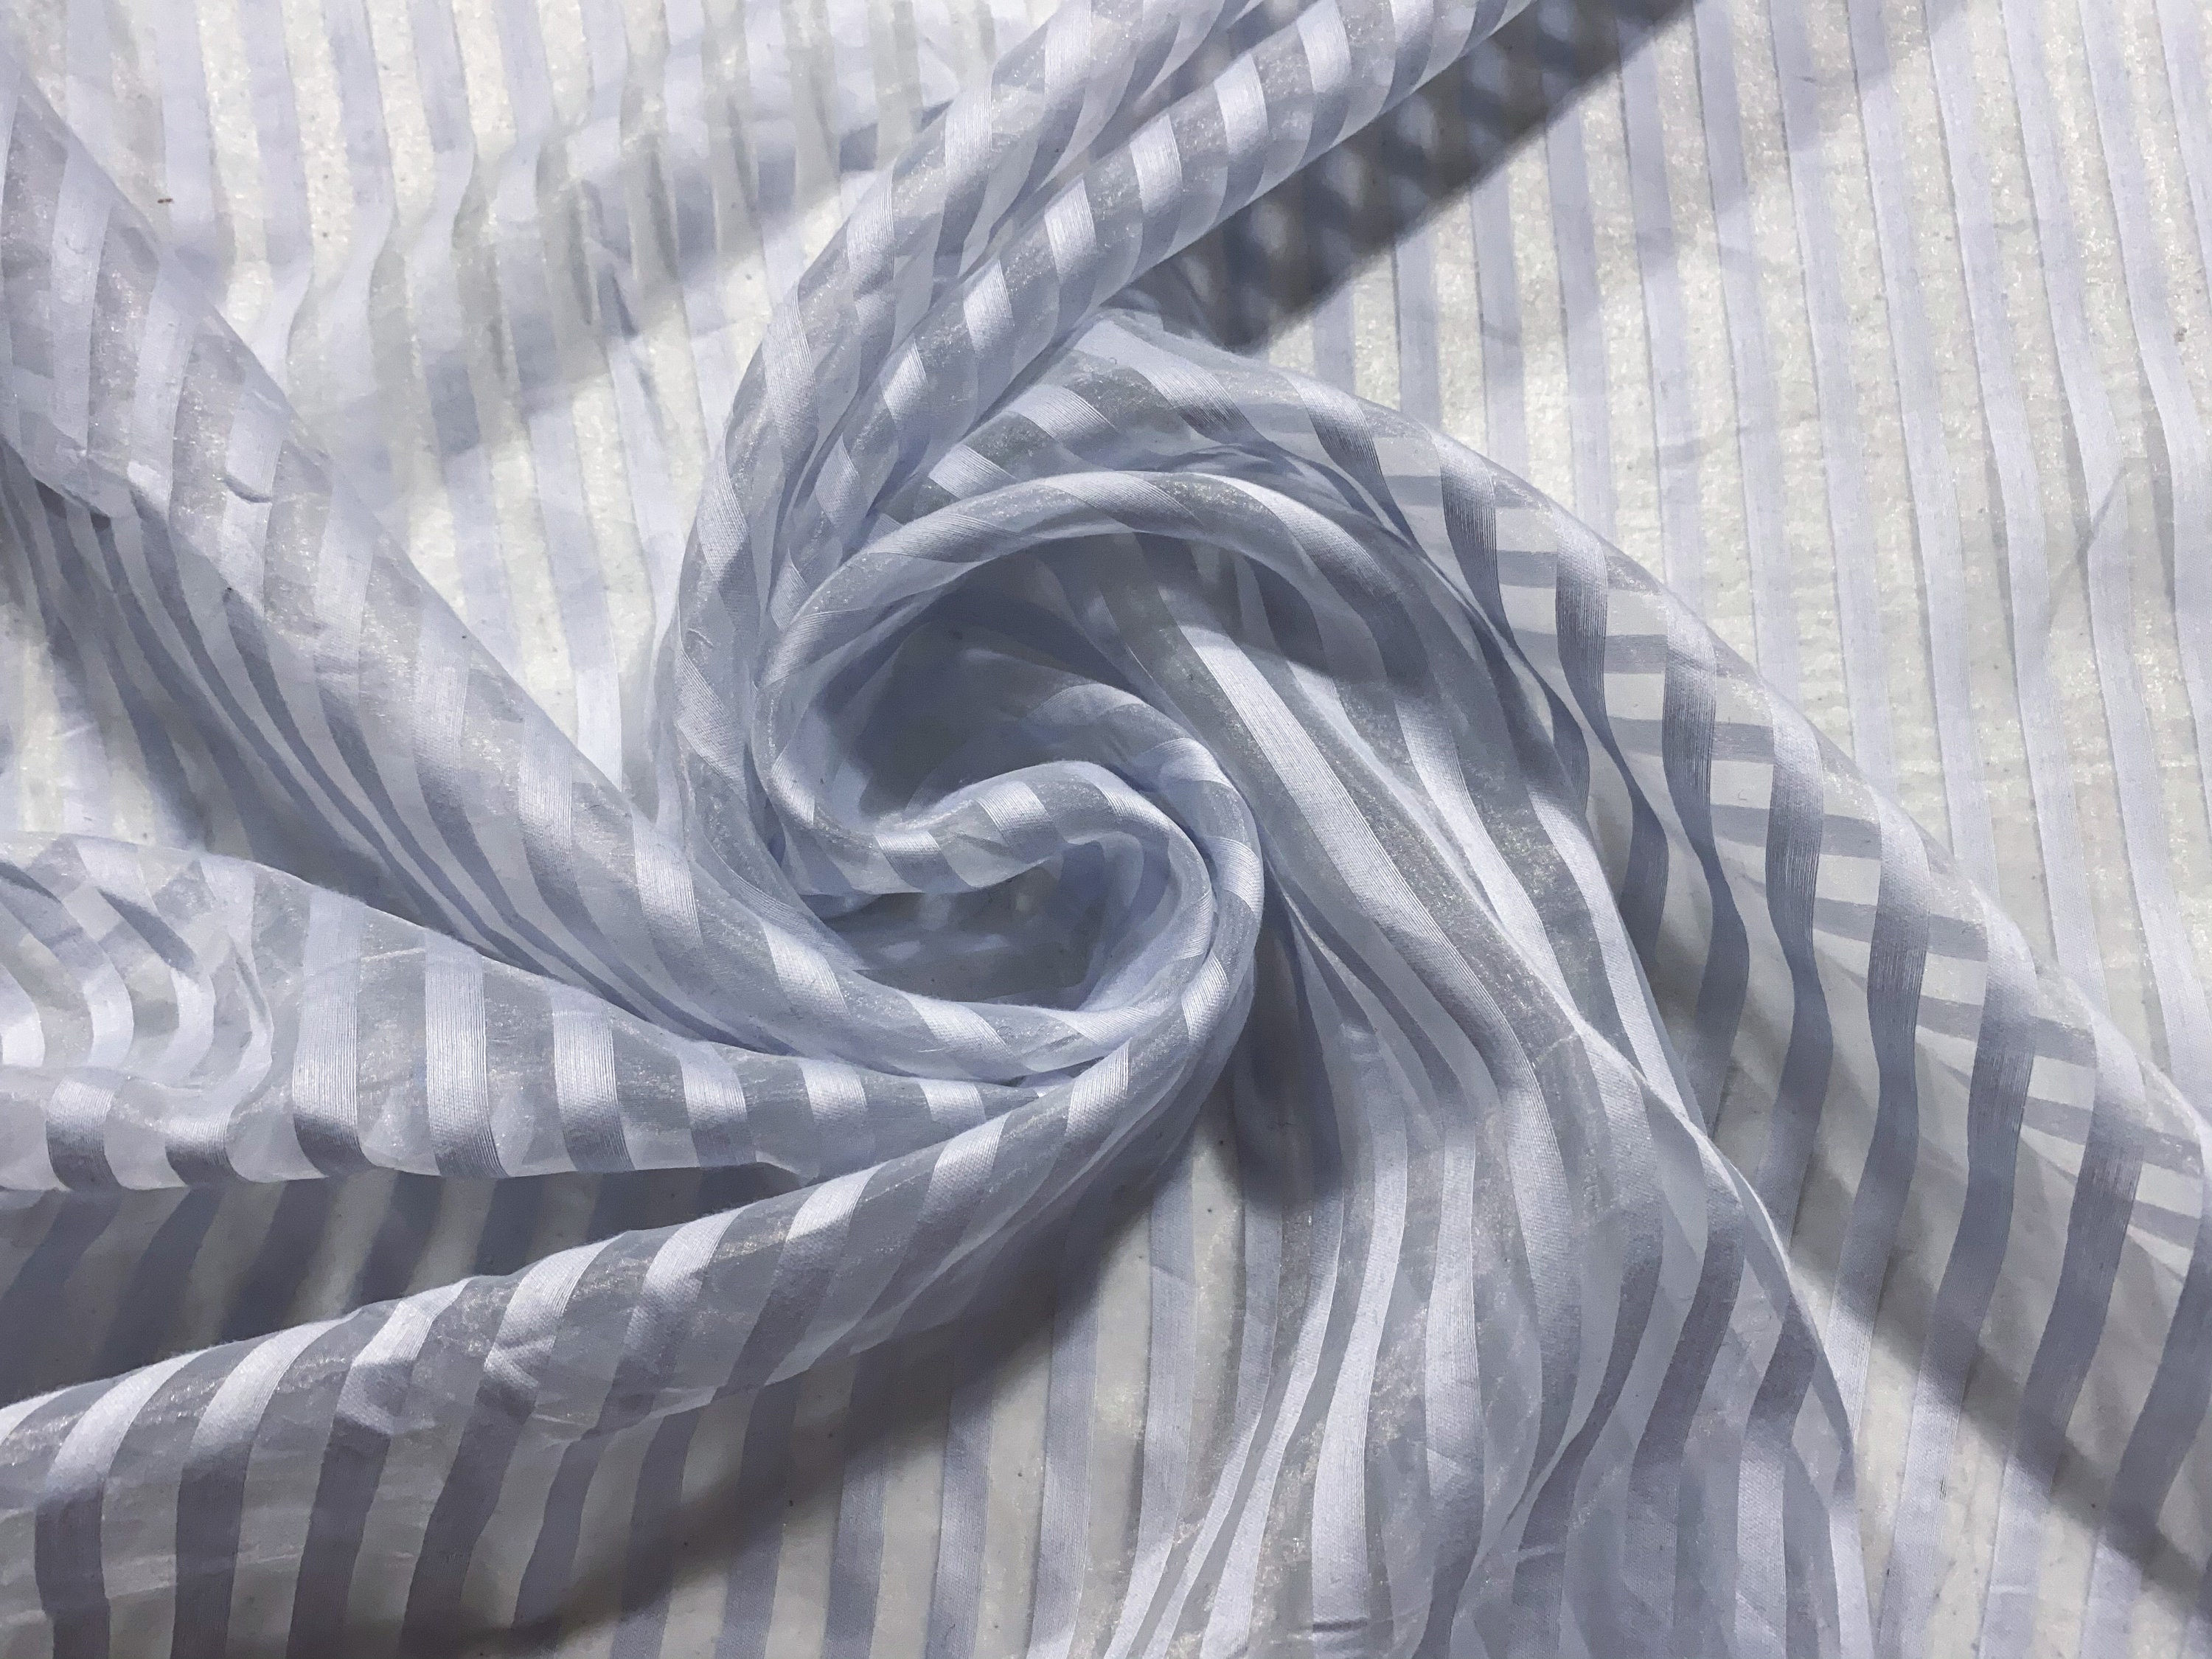 Icy Blue Shadow Stripe - Lurex Shimmer Chiffon - Pastel Blue / Sheer  Striped - Silvery Metallic Stripes - Apparel Fabric by the Yard [F0699]